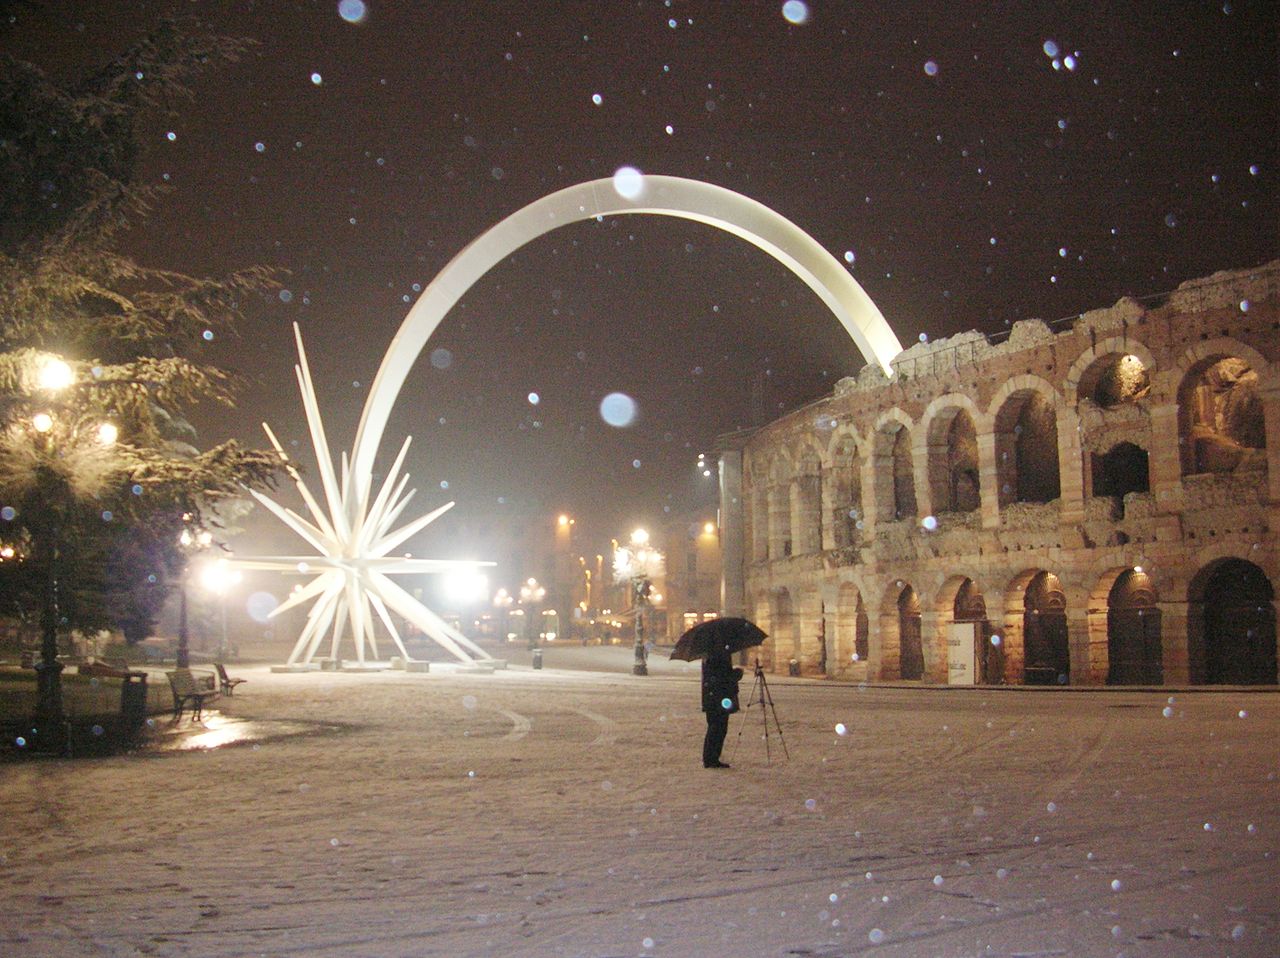 Natale a Verona